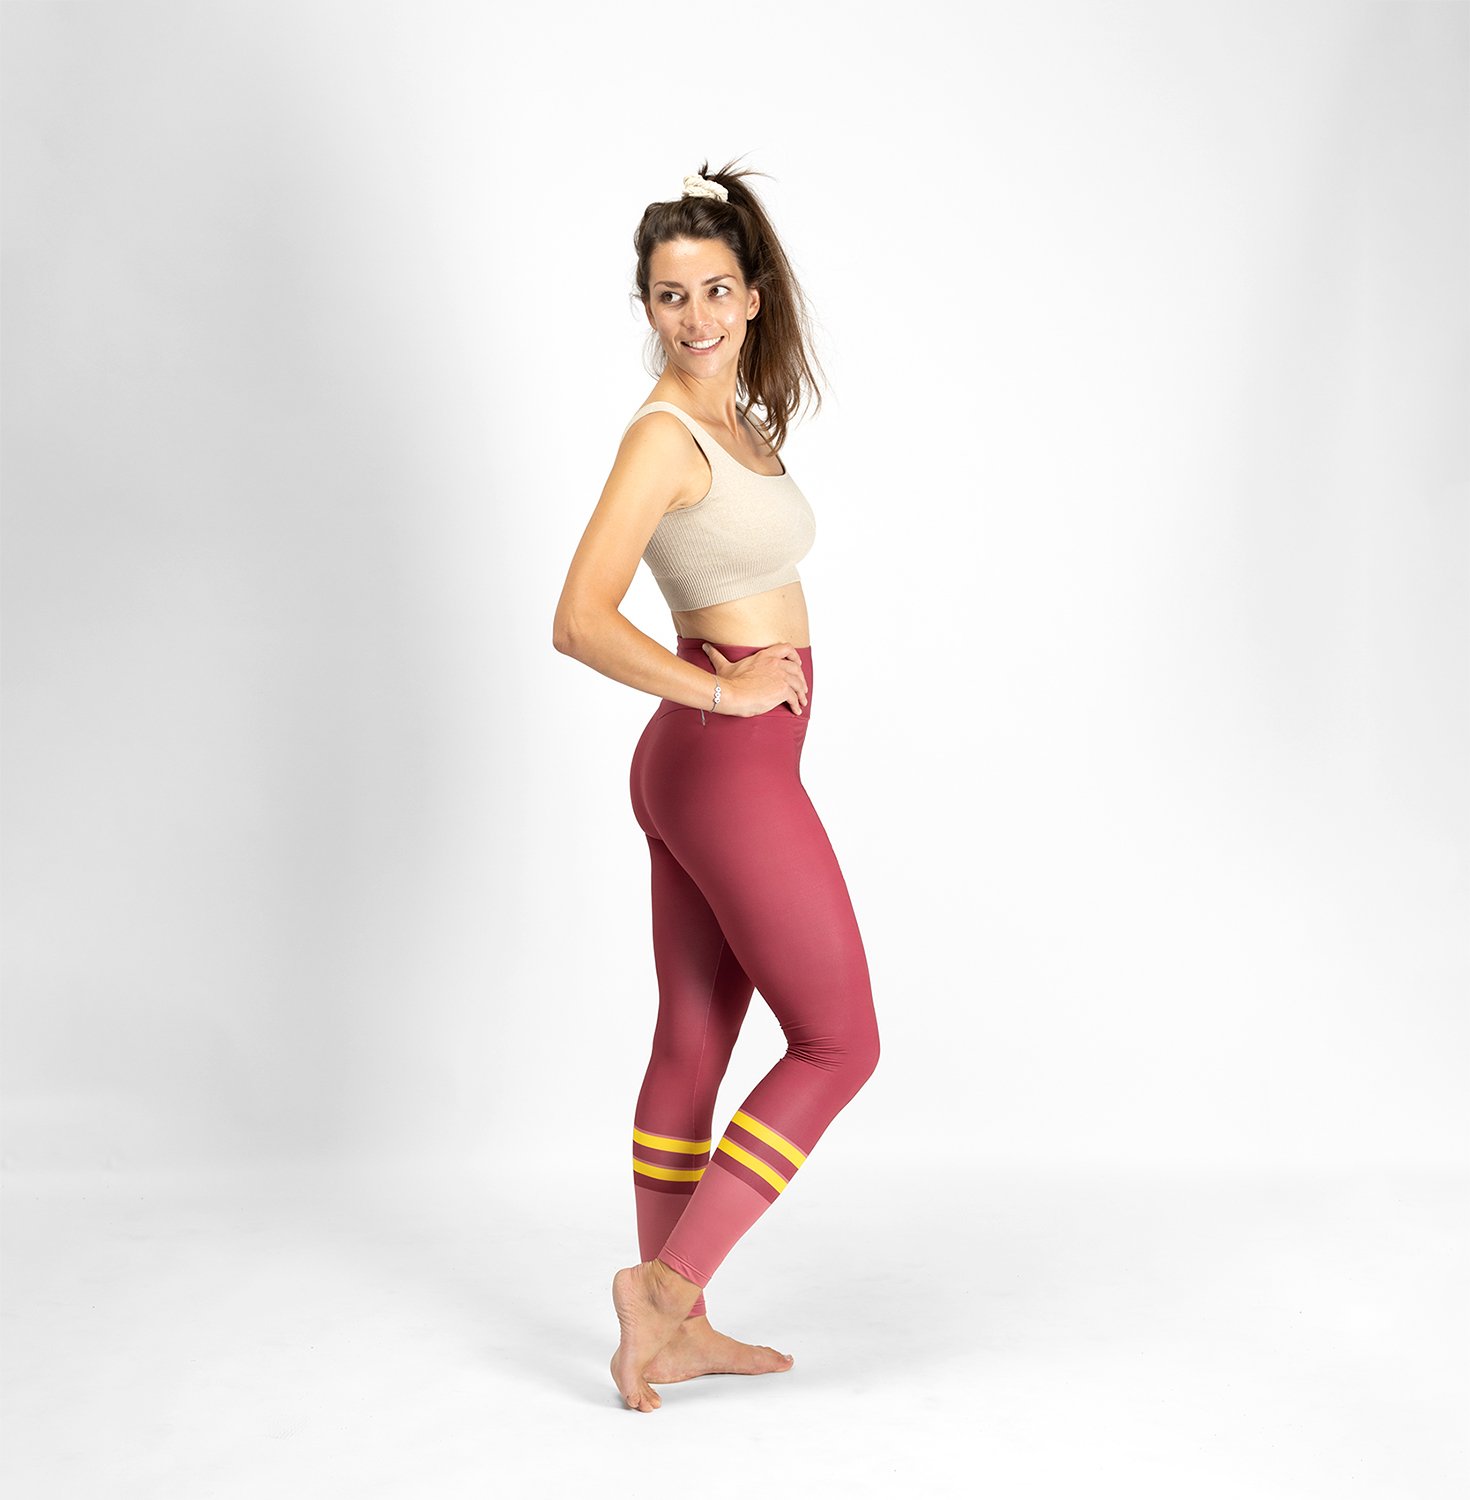 Customizable Yoga Leggings | Design your own | Shoe Zero